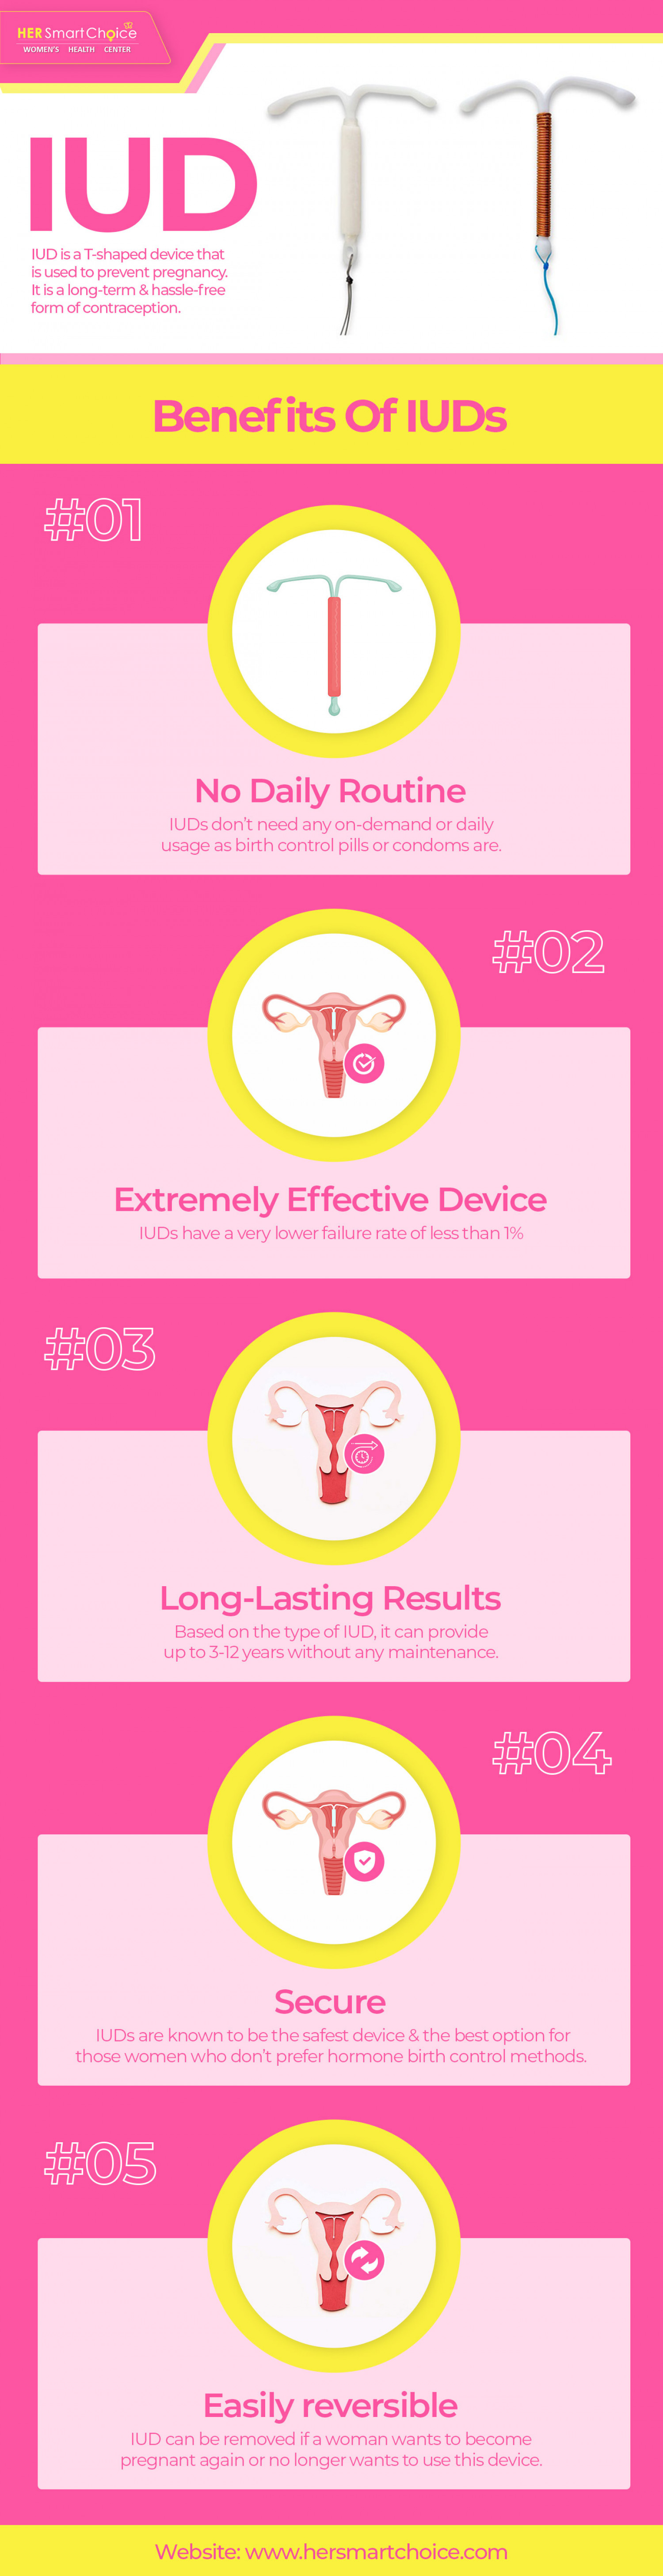 Benefits Of IUDs Infographic